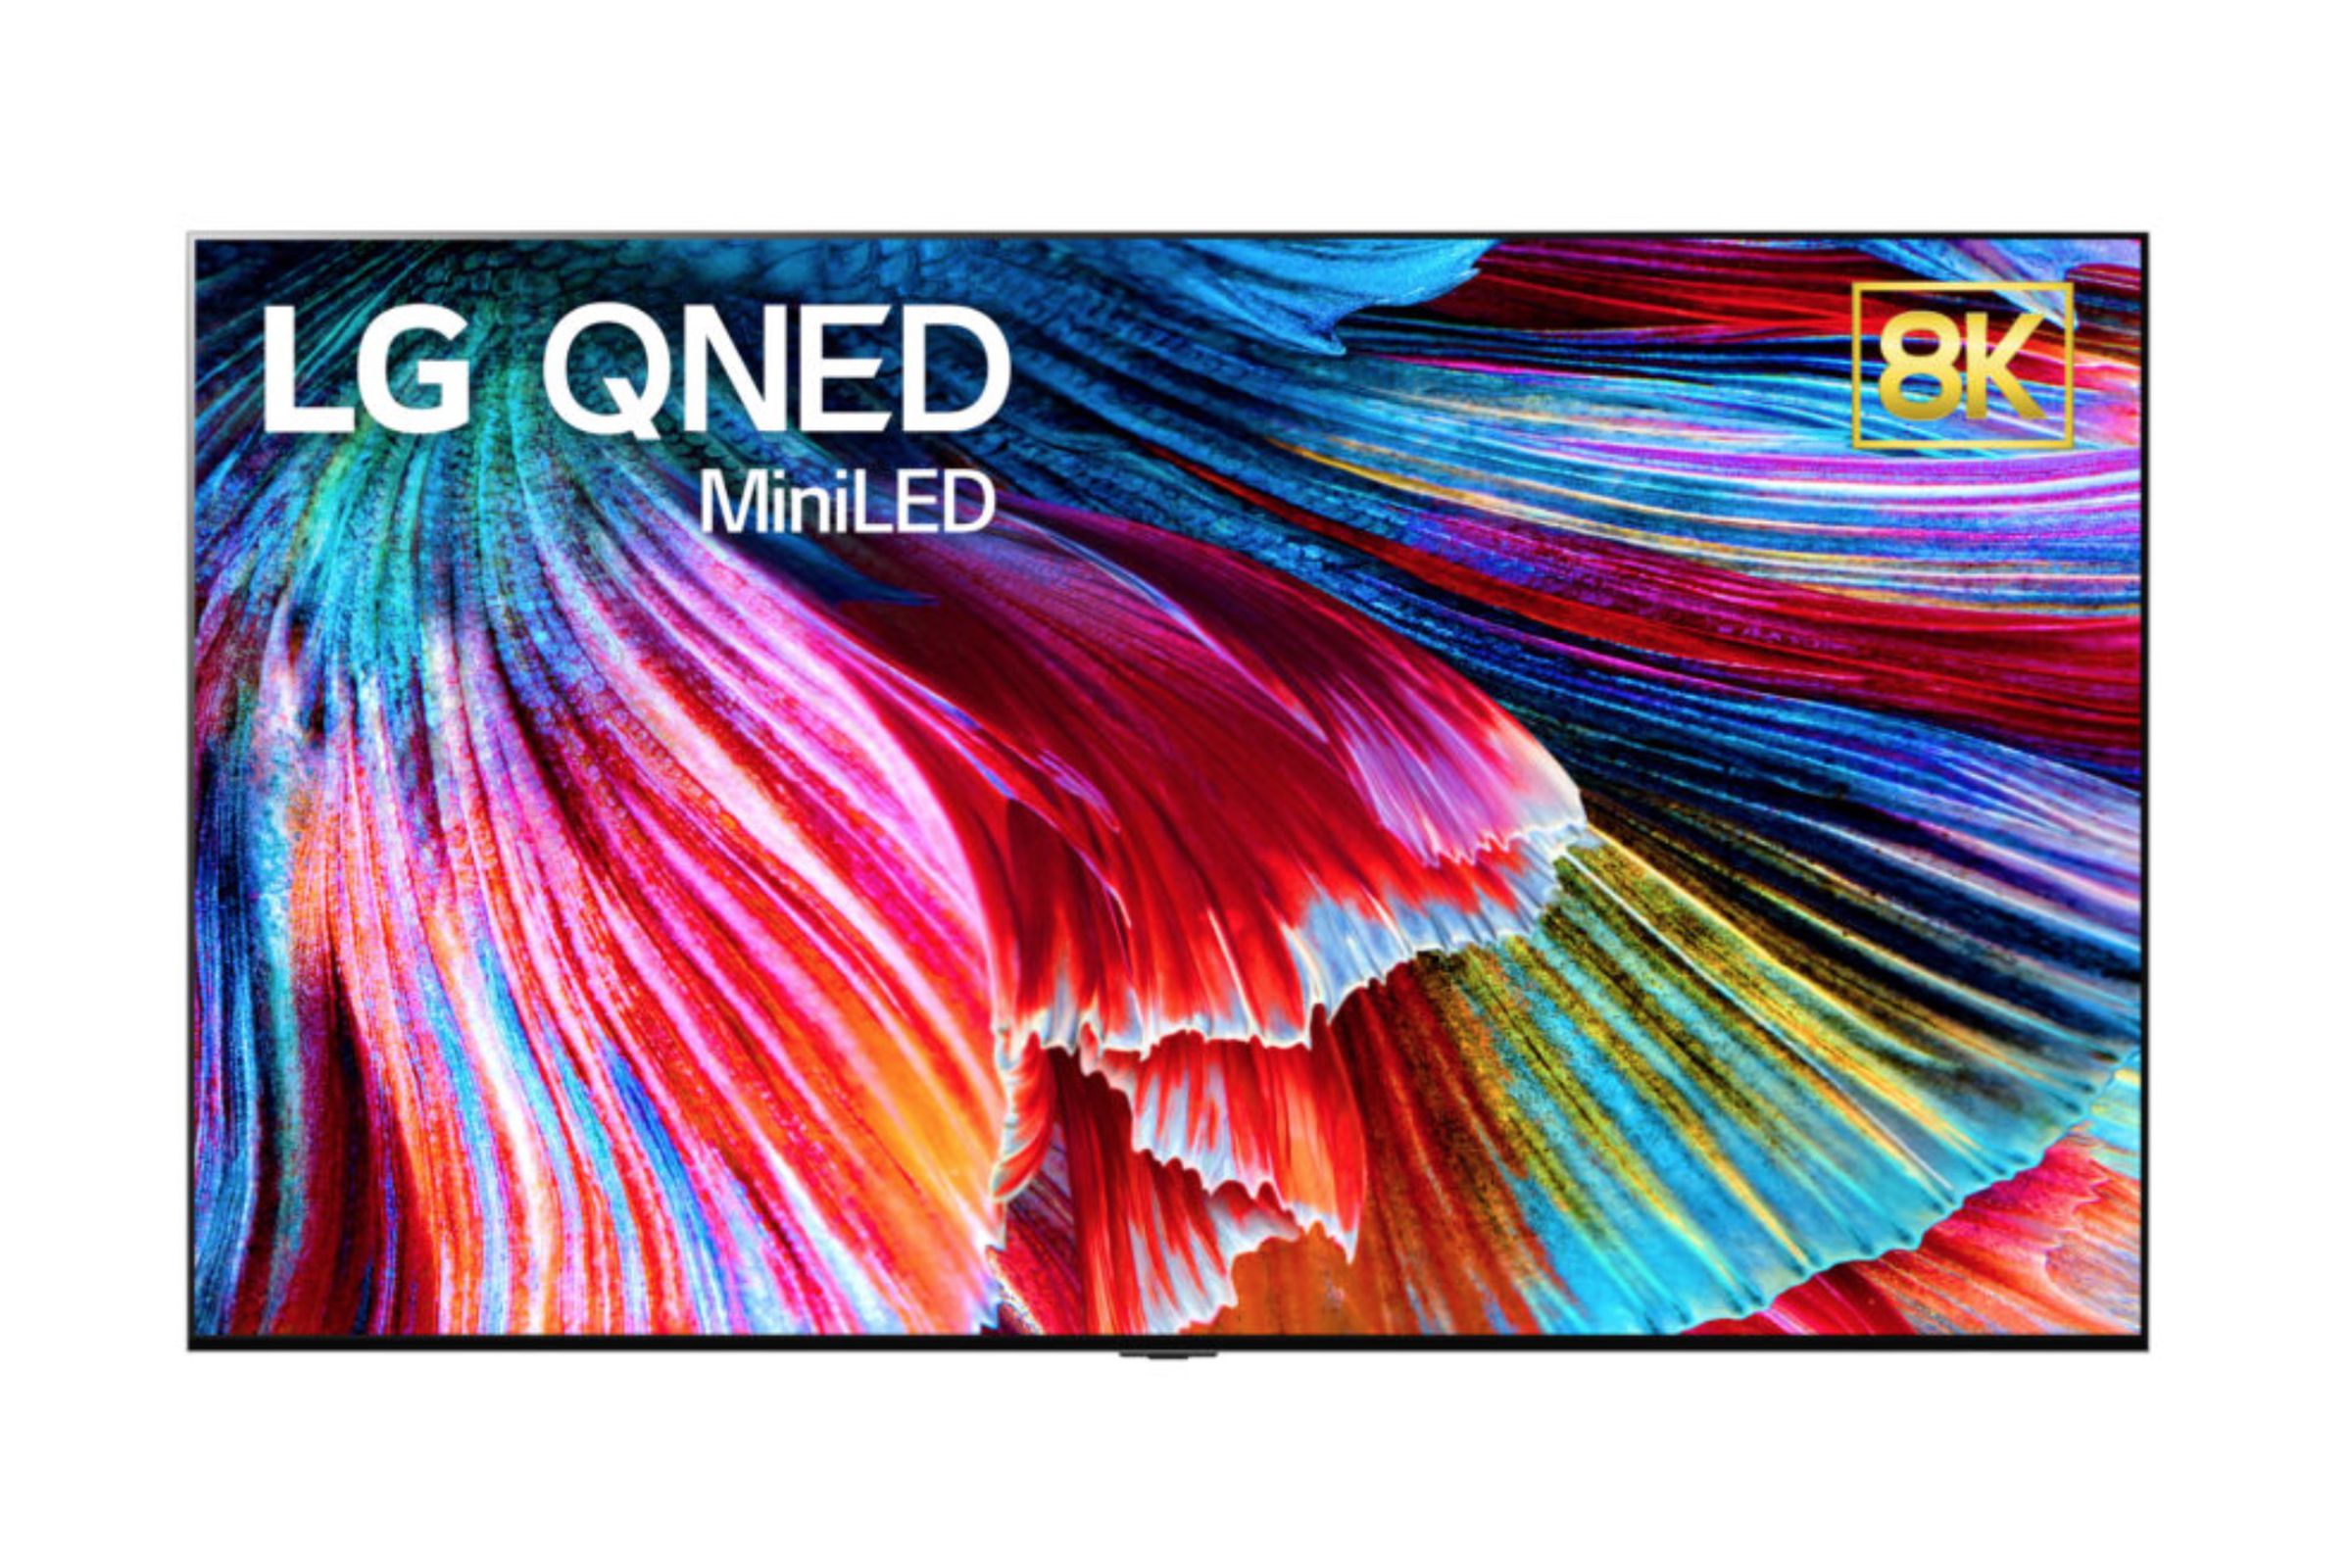 LG’s new QNED TV uses Mini LEDs as the light source.